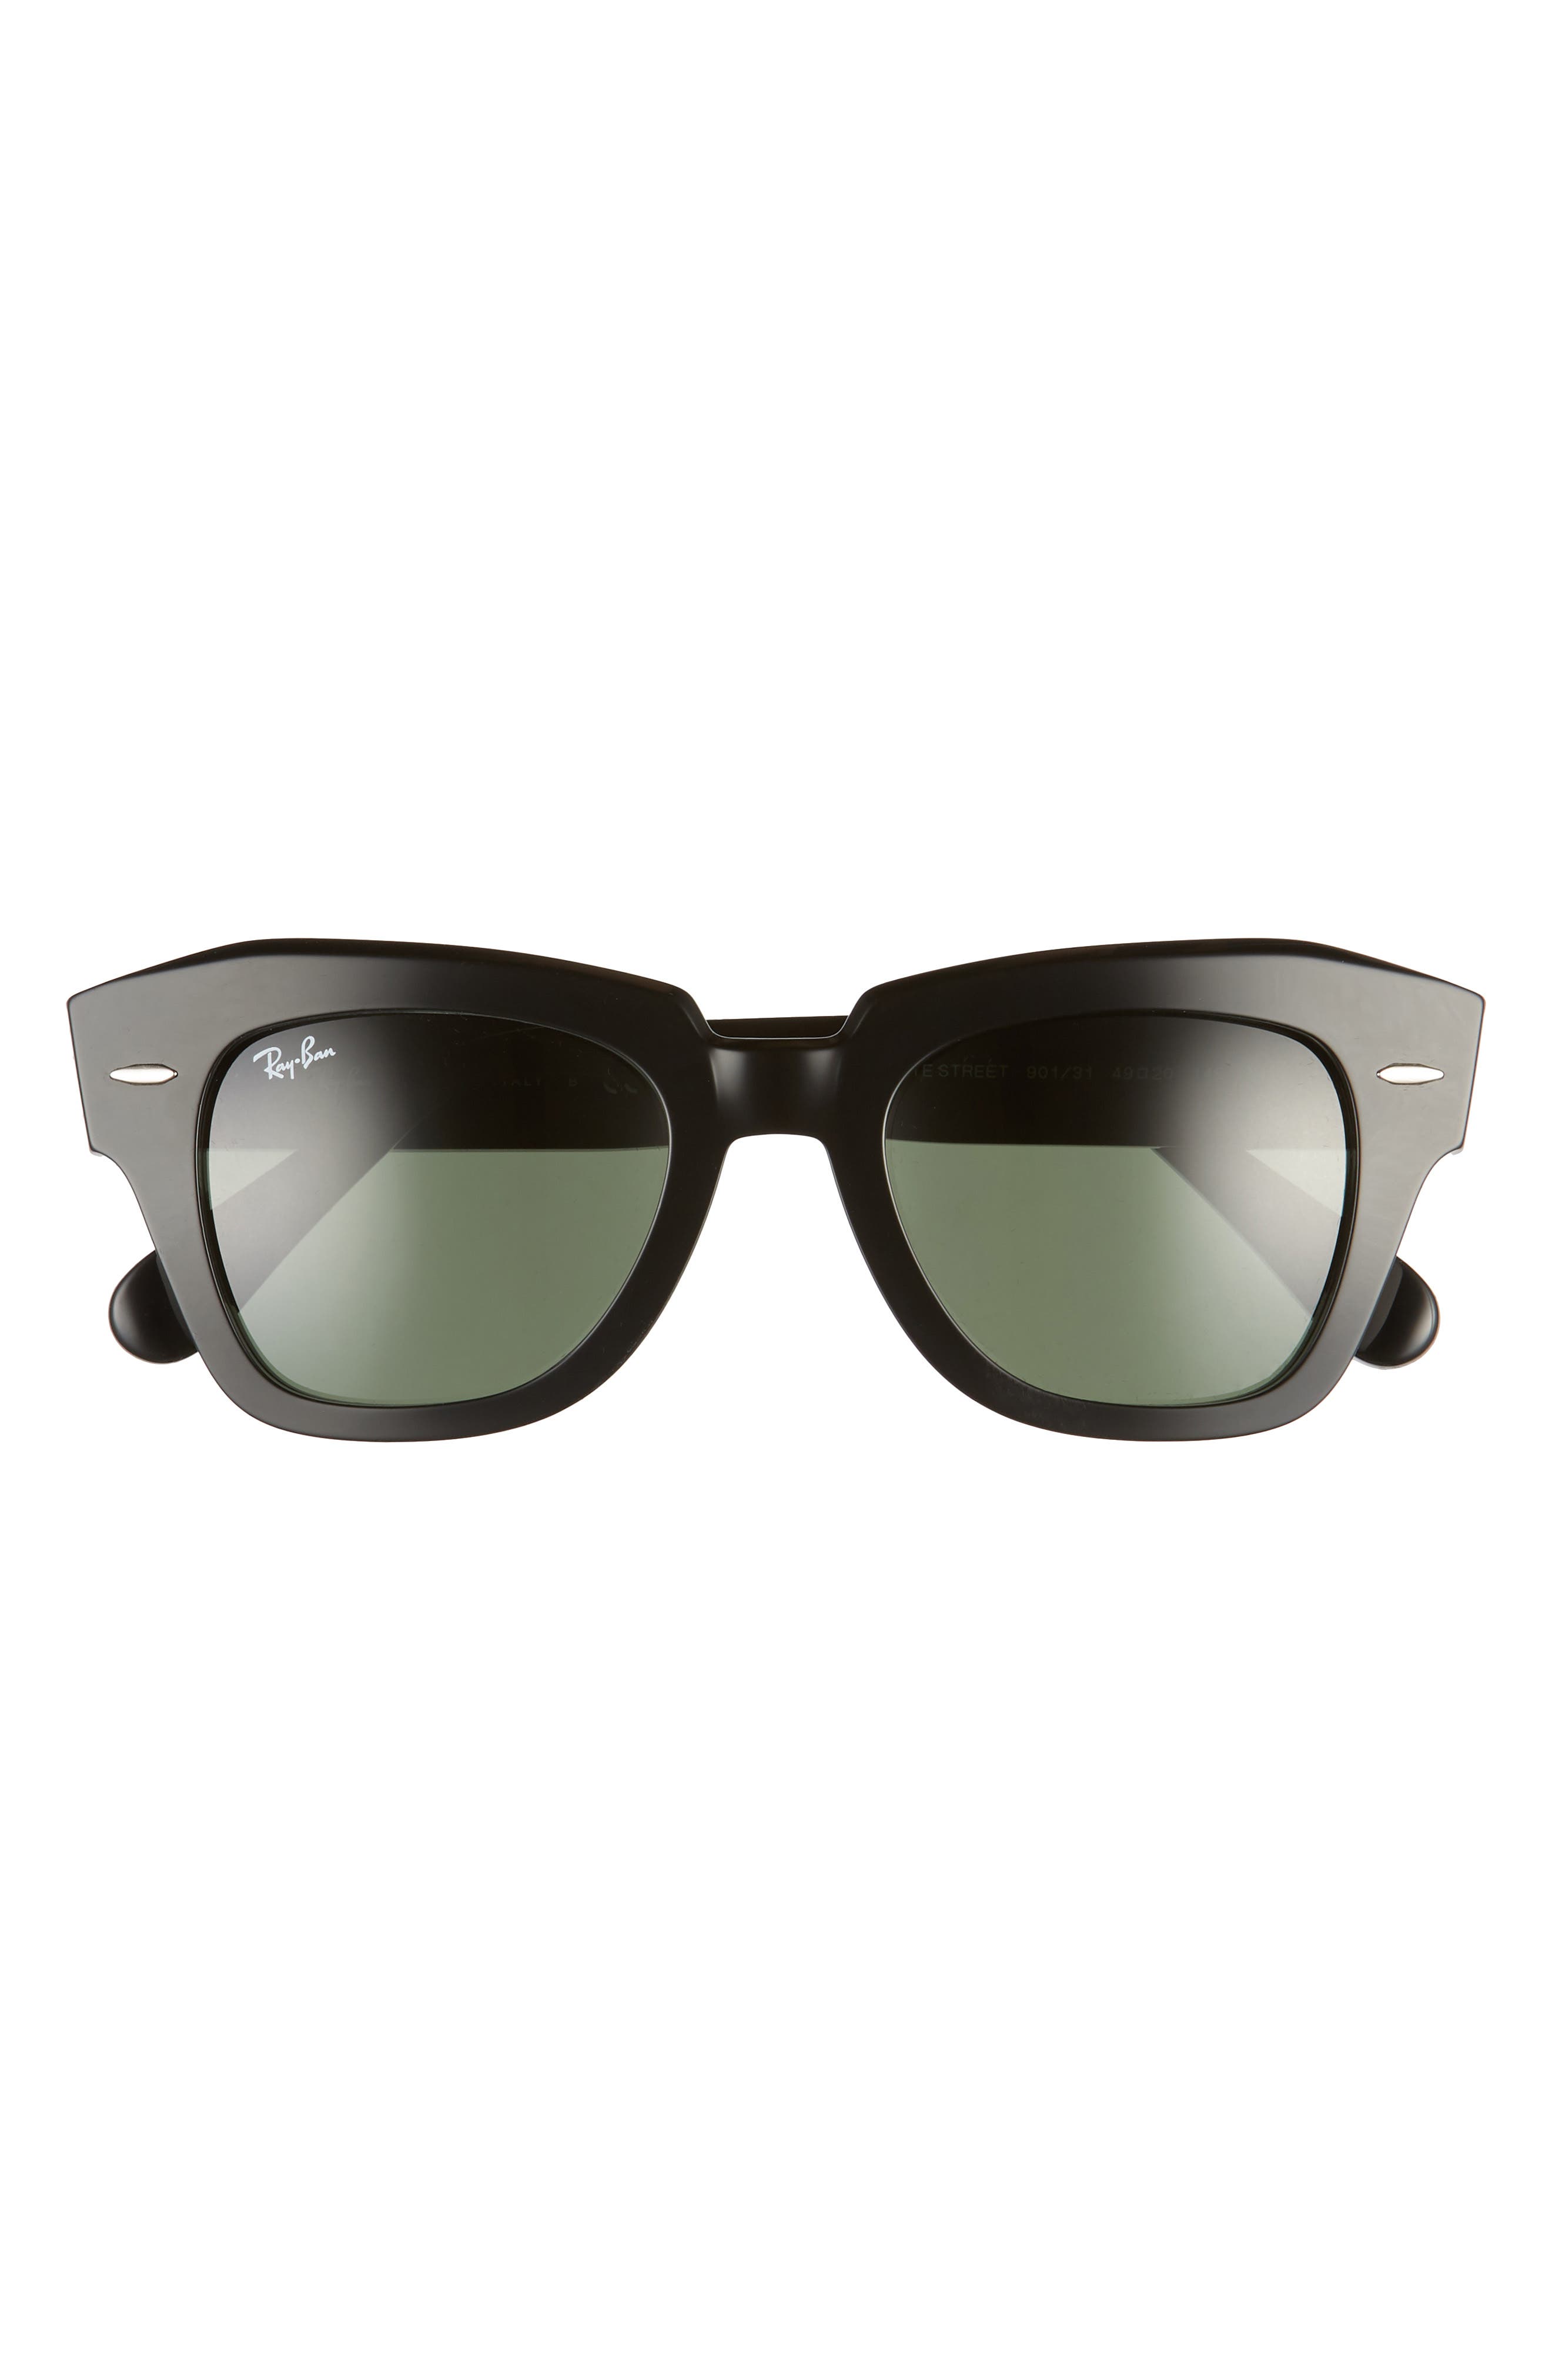 ray ban active square sunglasses